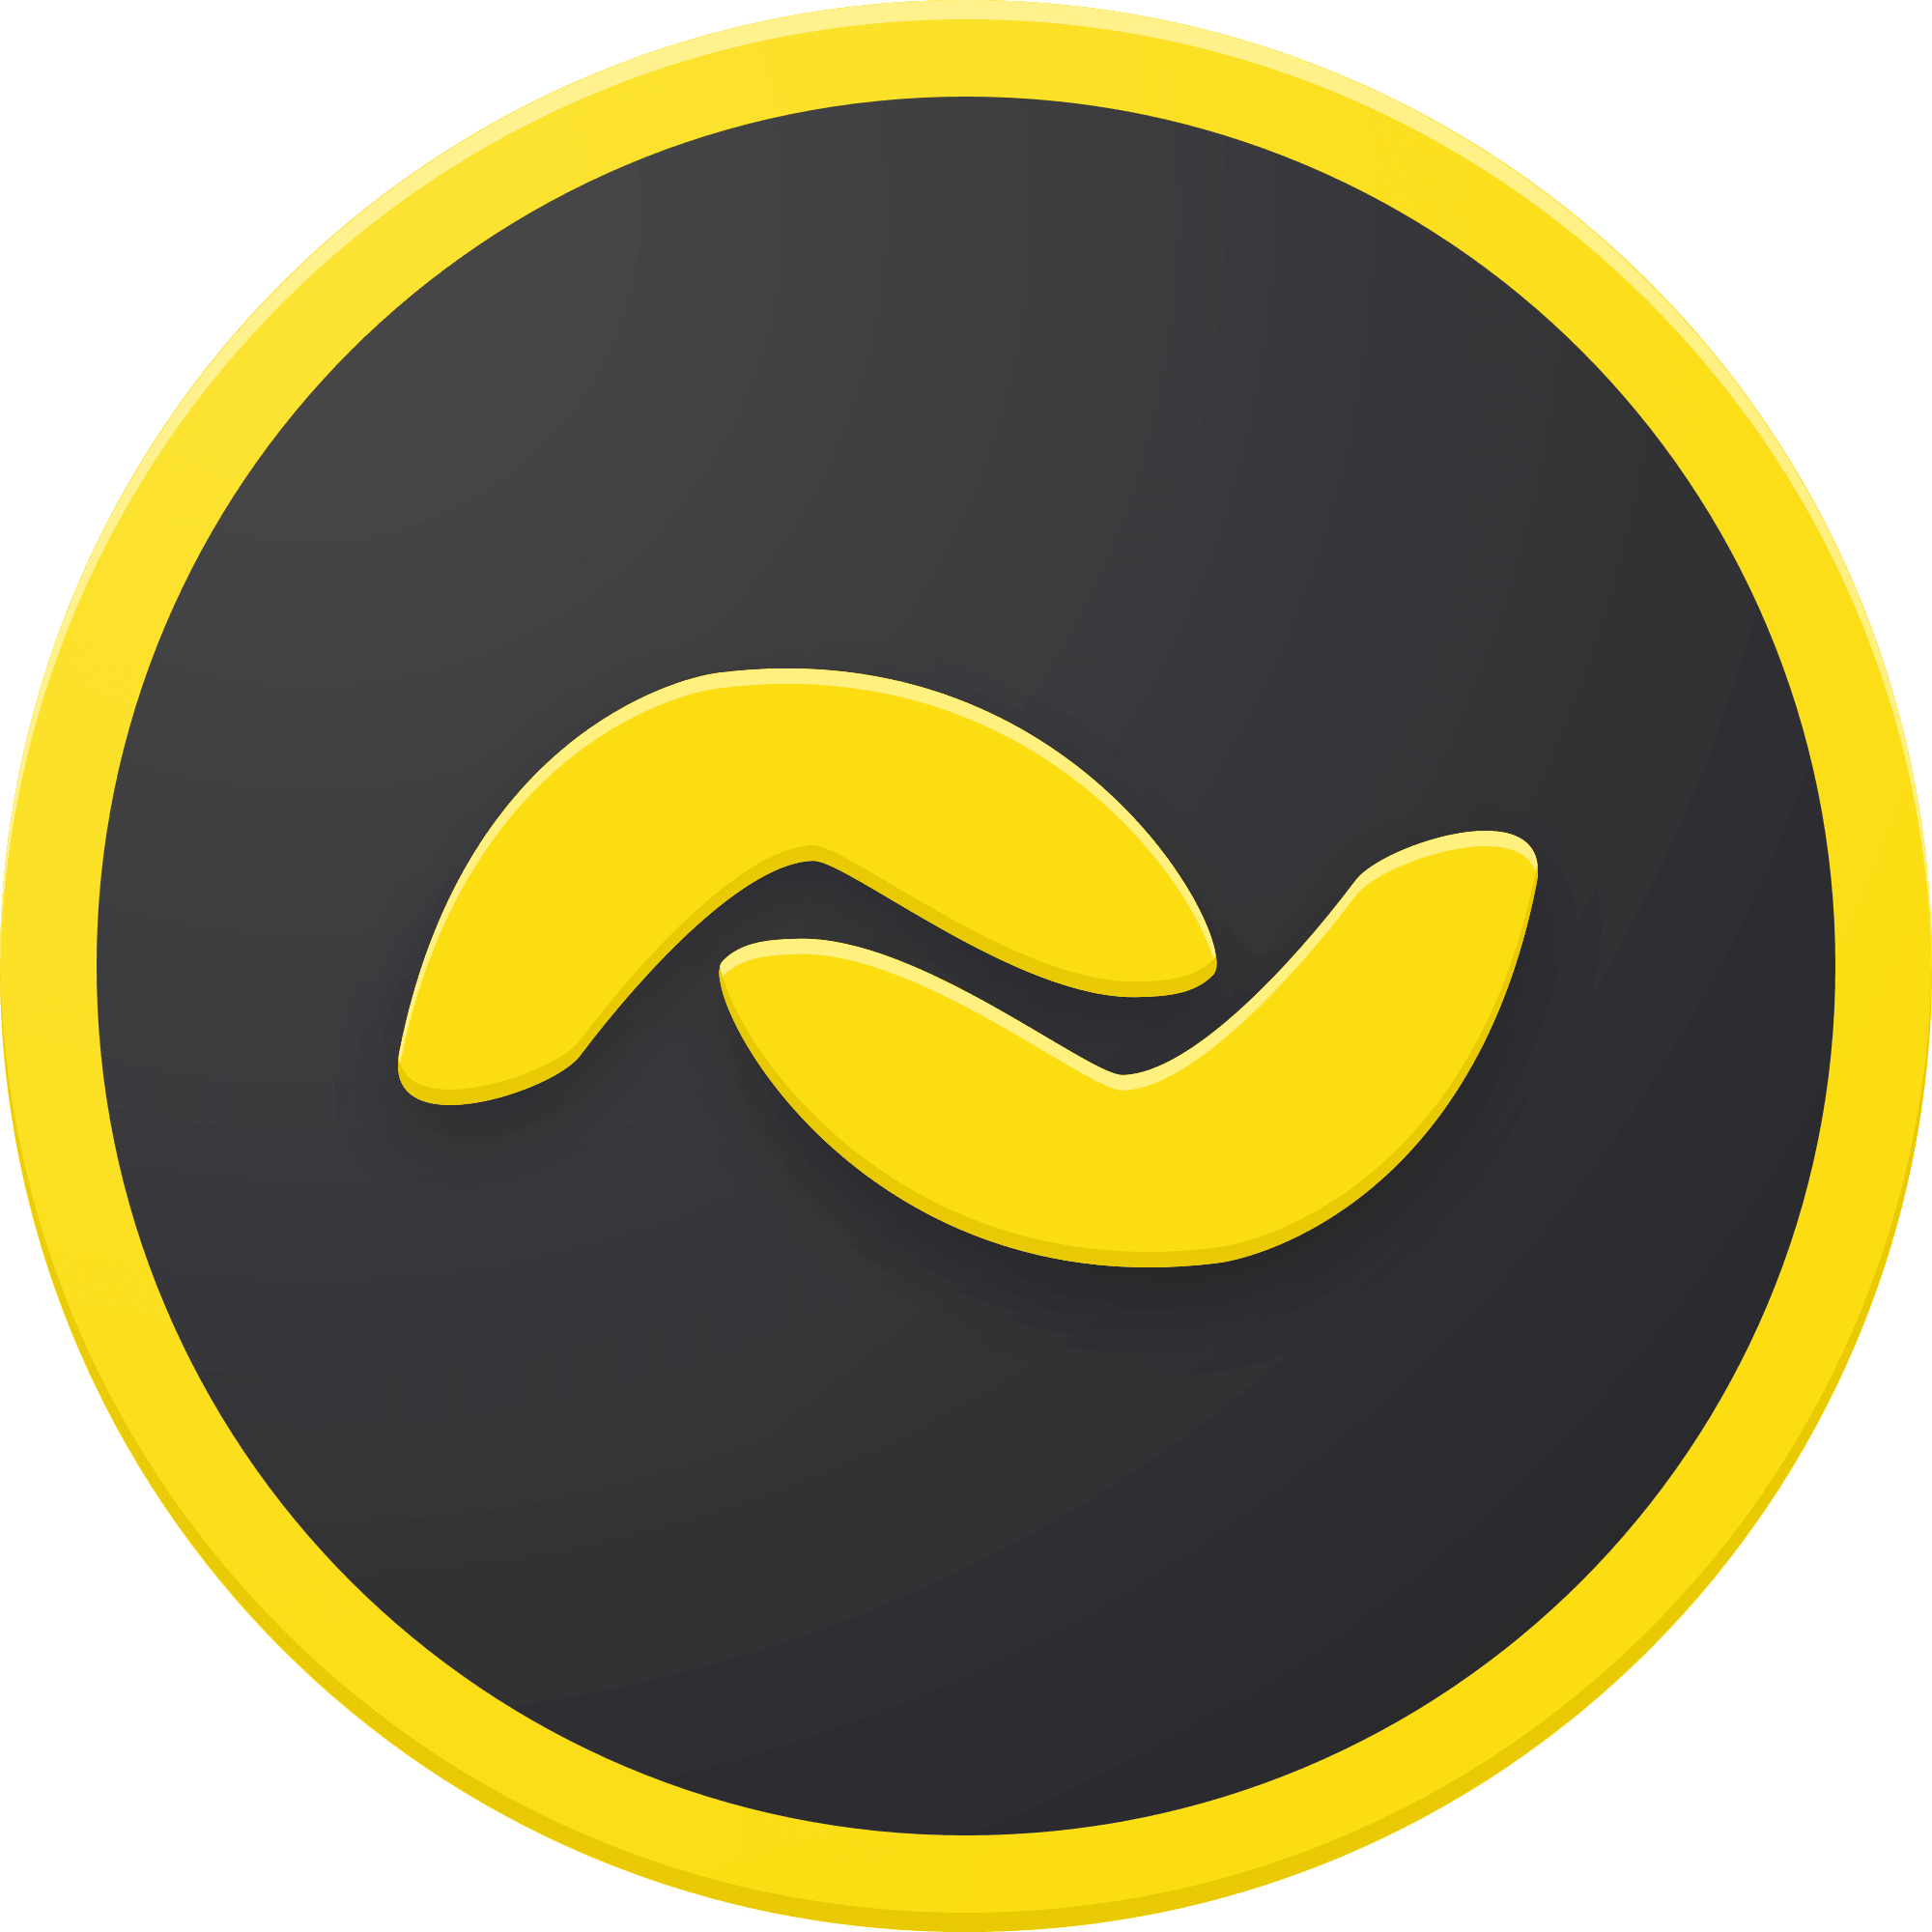 Banano logo in png format